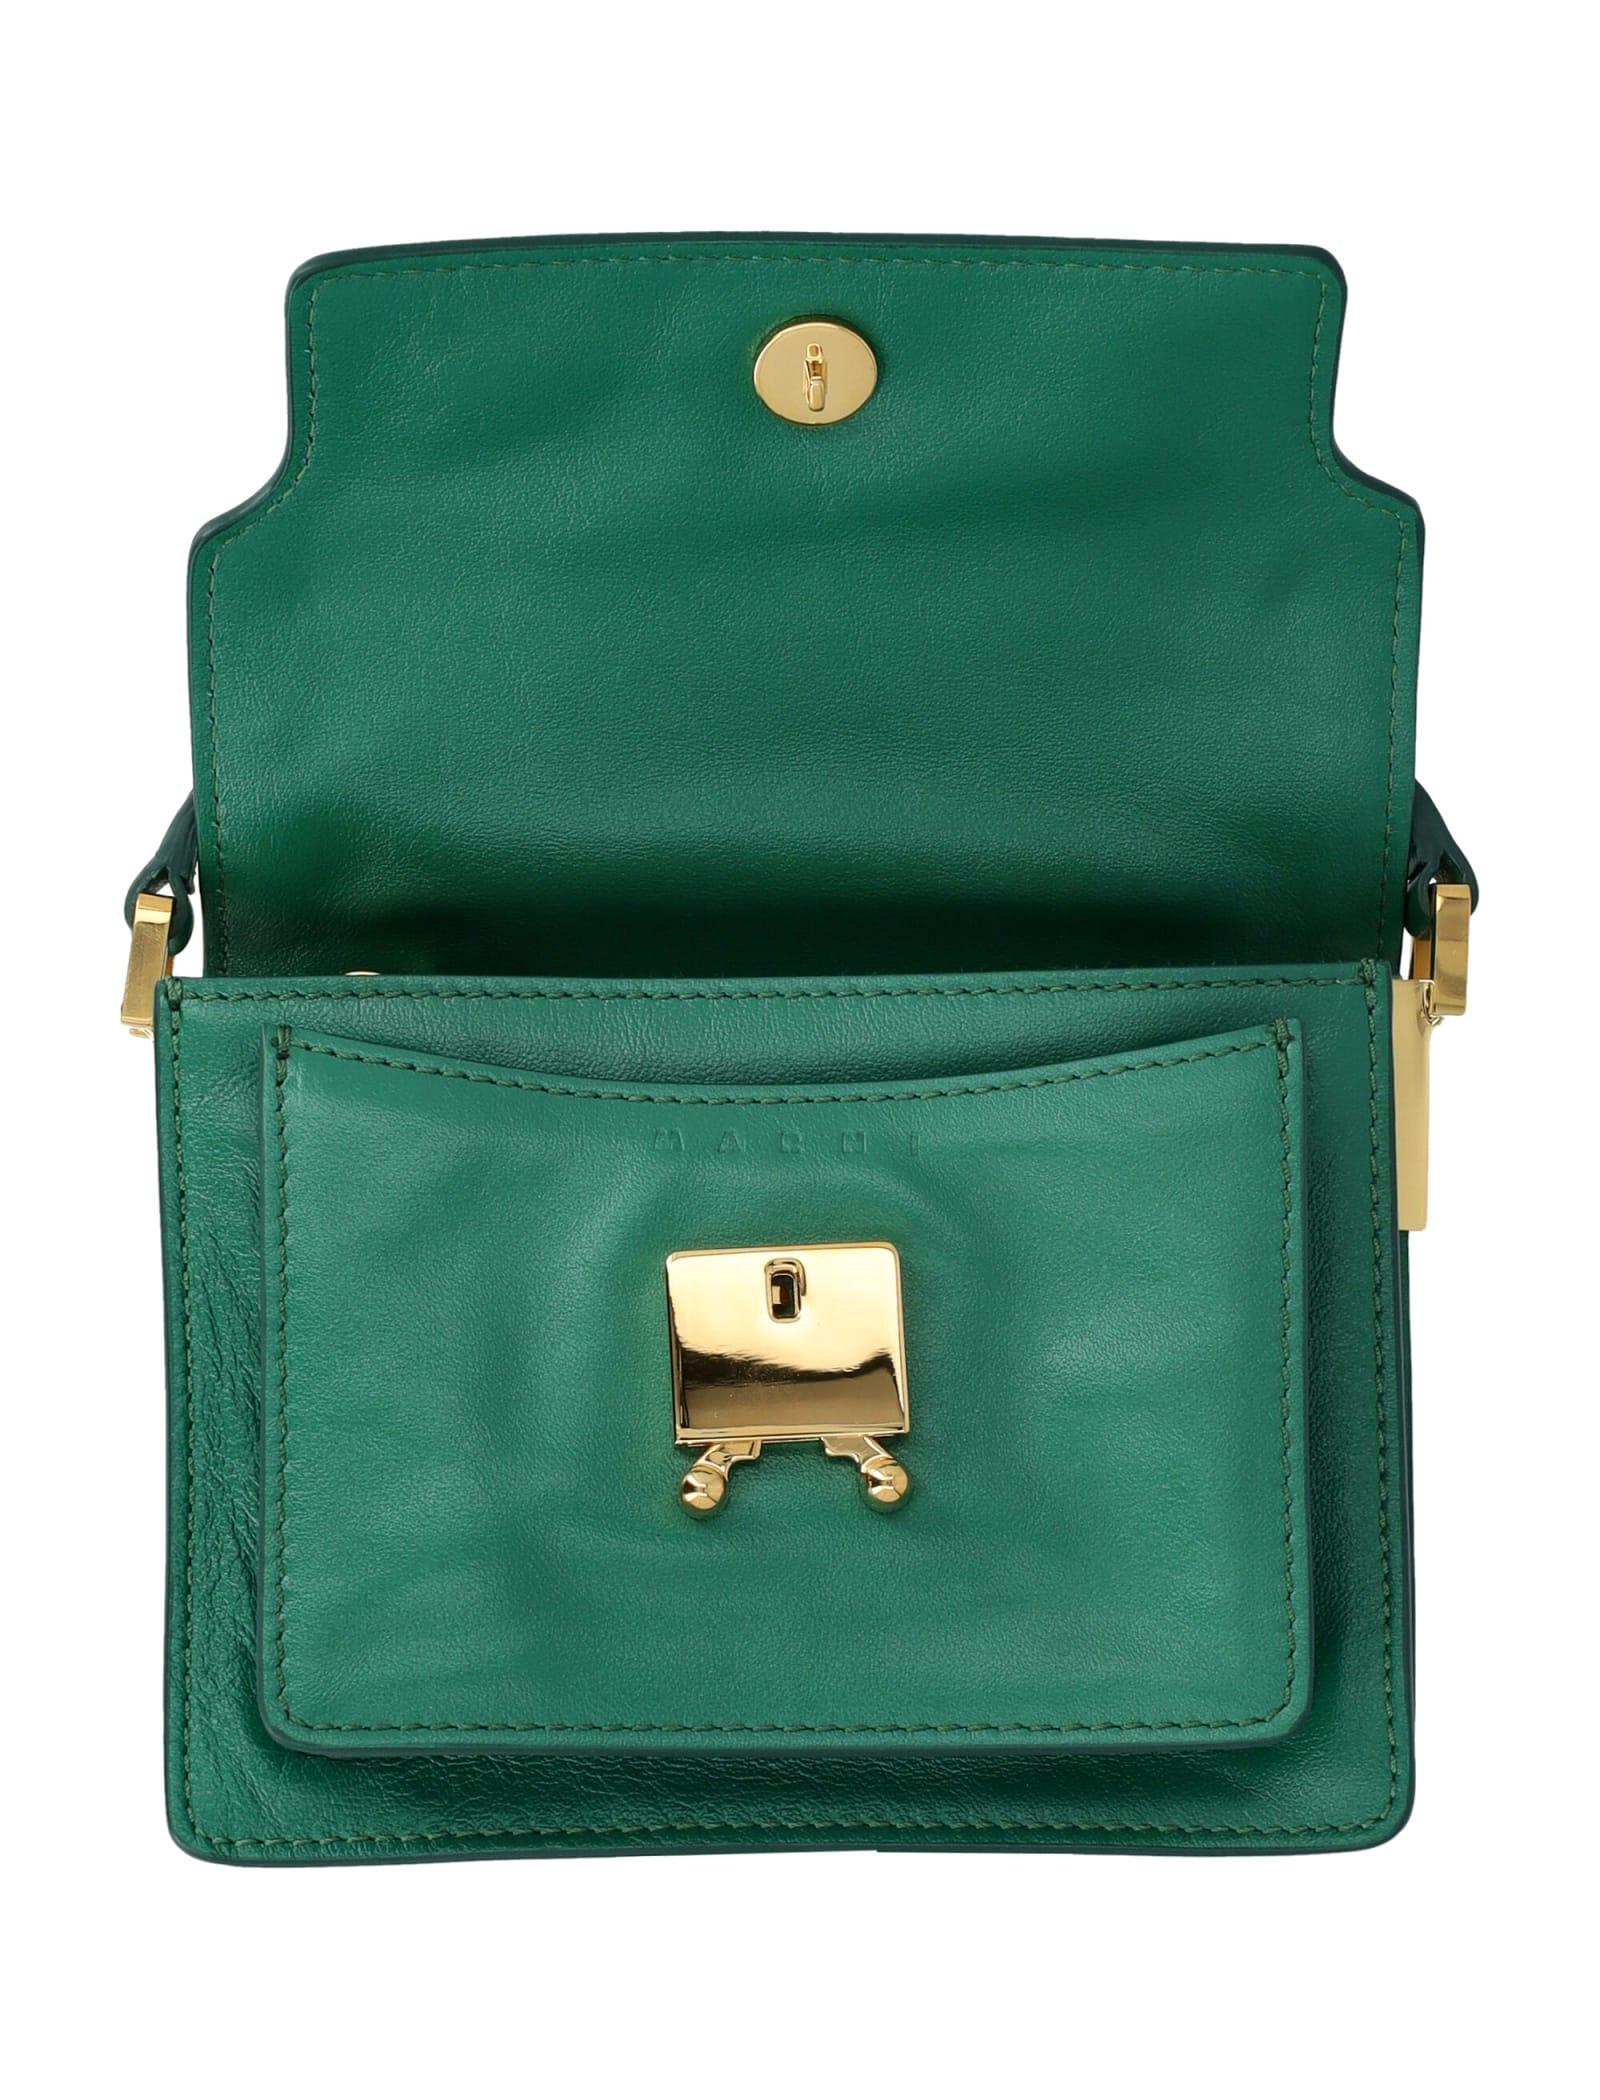 Marni Green Soft Mini Trunk Bag Marni